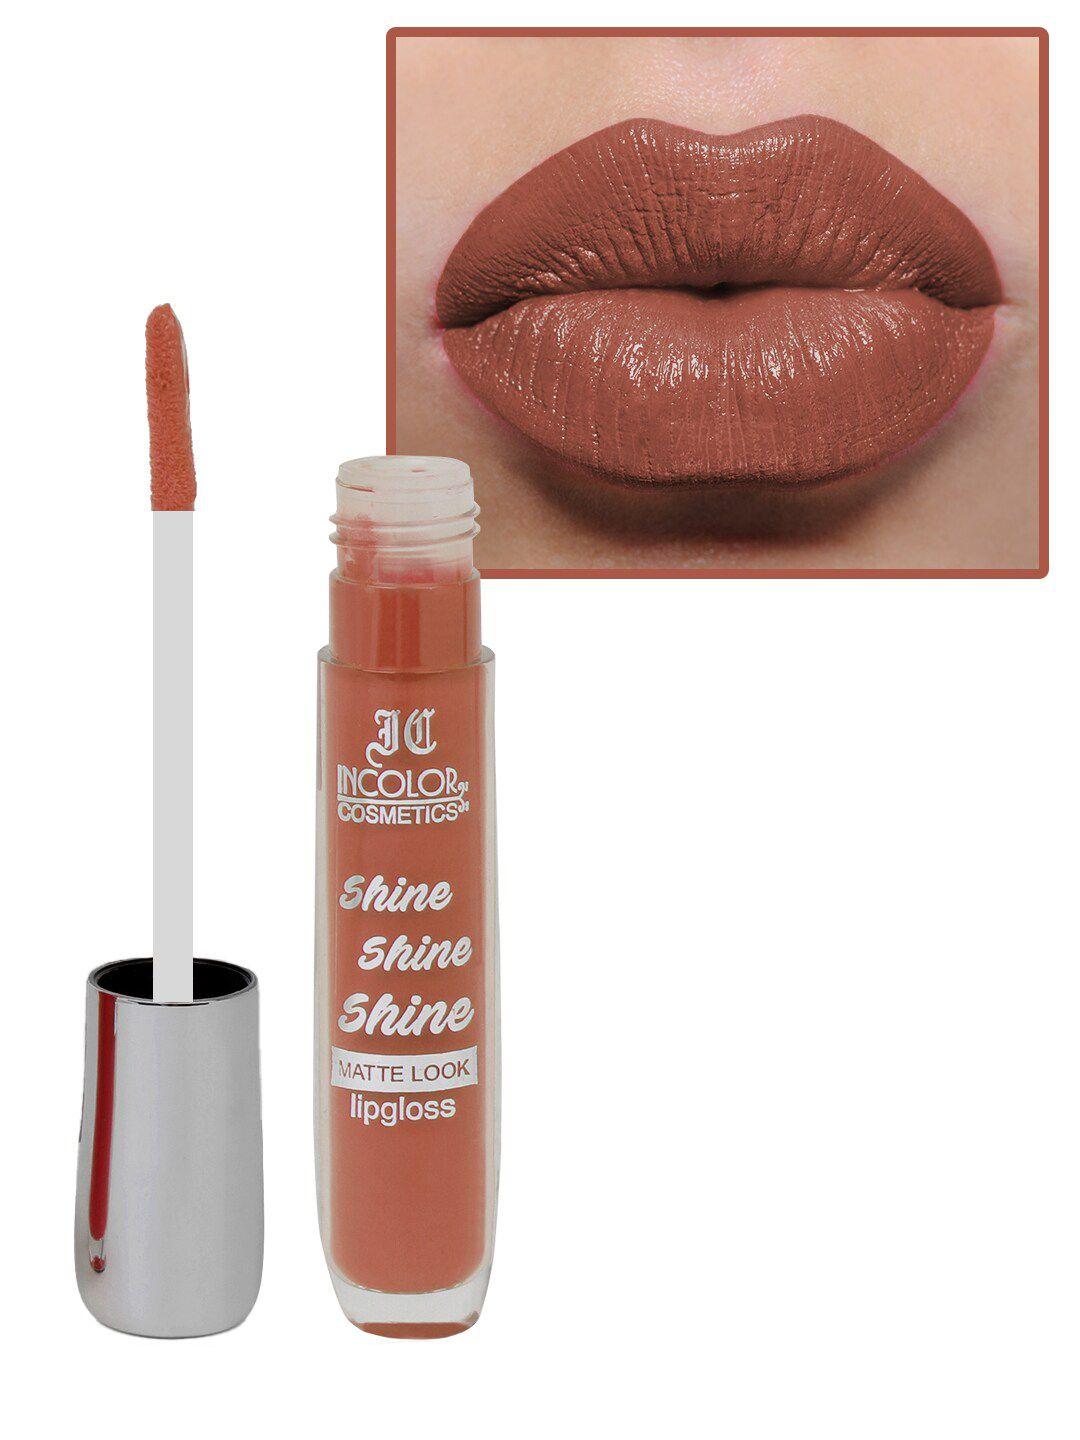 incolor shine shine shine long-wearing lightweight matte look lip gloss 8ml - shade 07